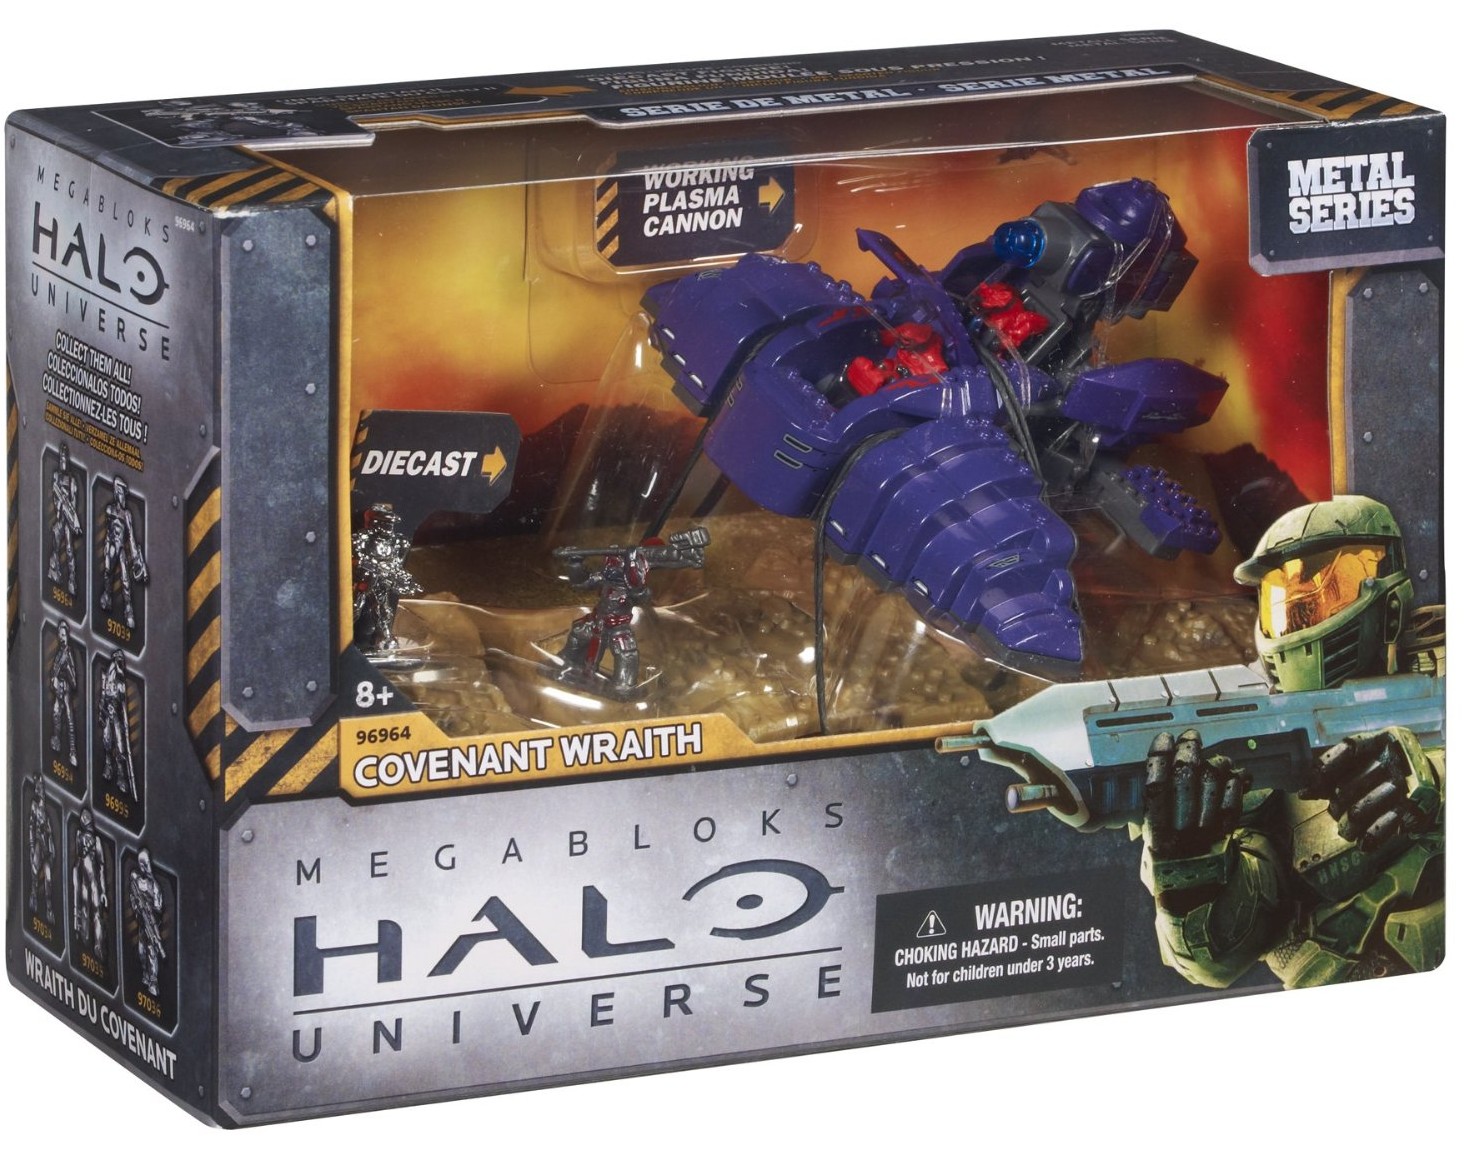 Mega Bloks Halo Universe Metal Series Covenant Wraith 96964 Boxed